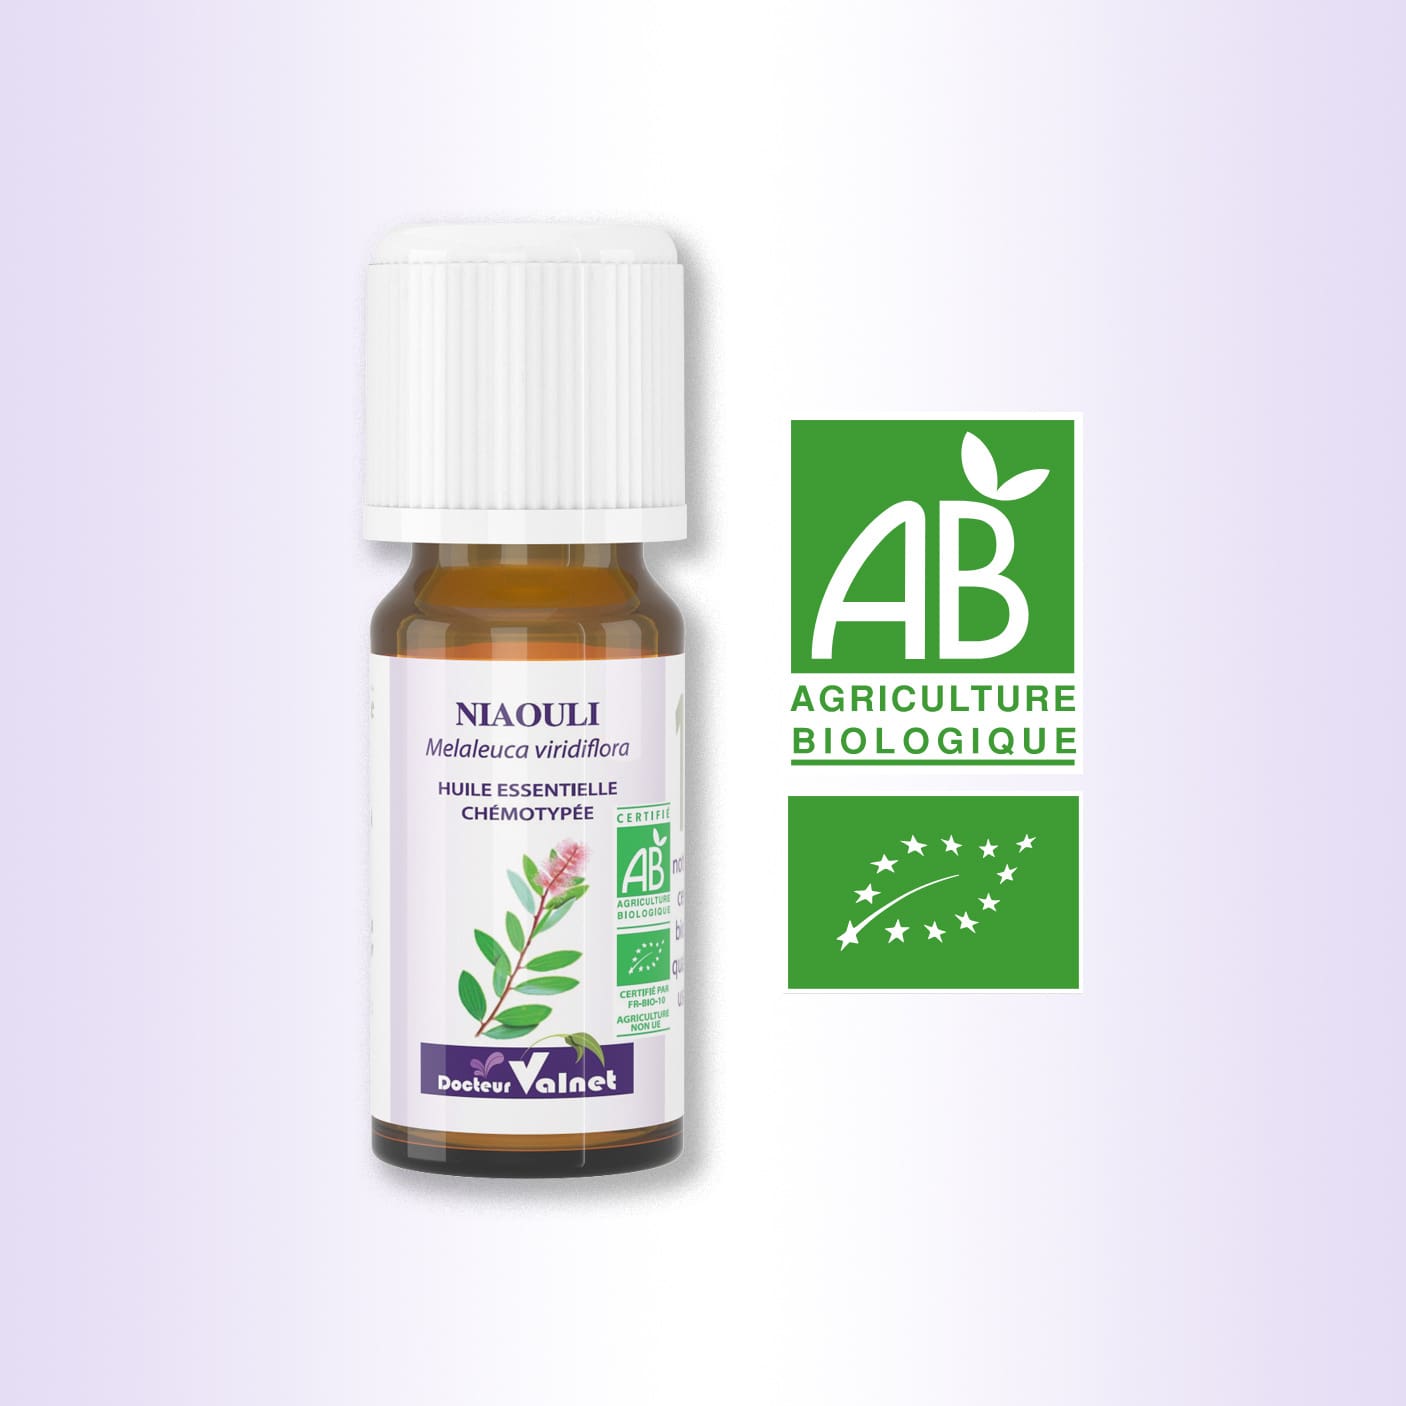 Niaouli bio, huile essentielle 100% pure et naturelle, flacon de 10 ml